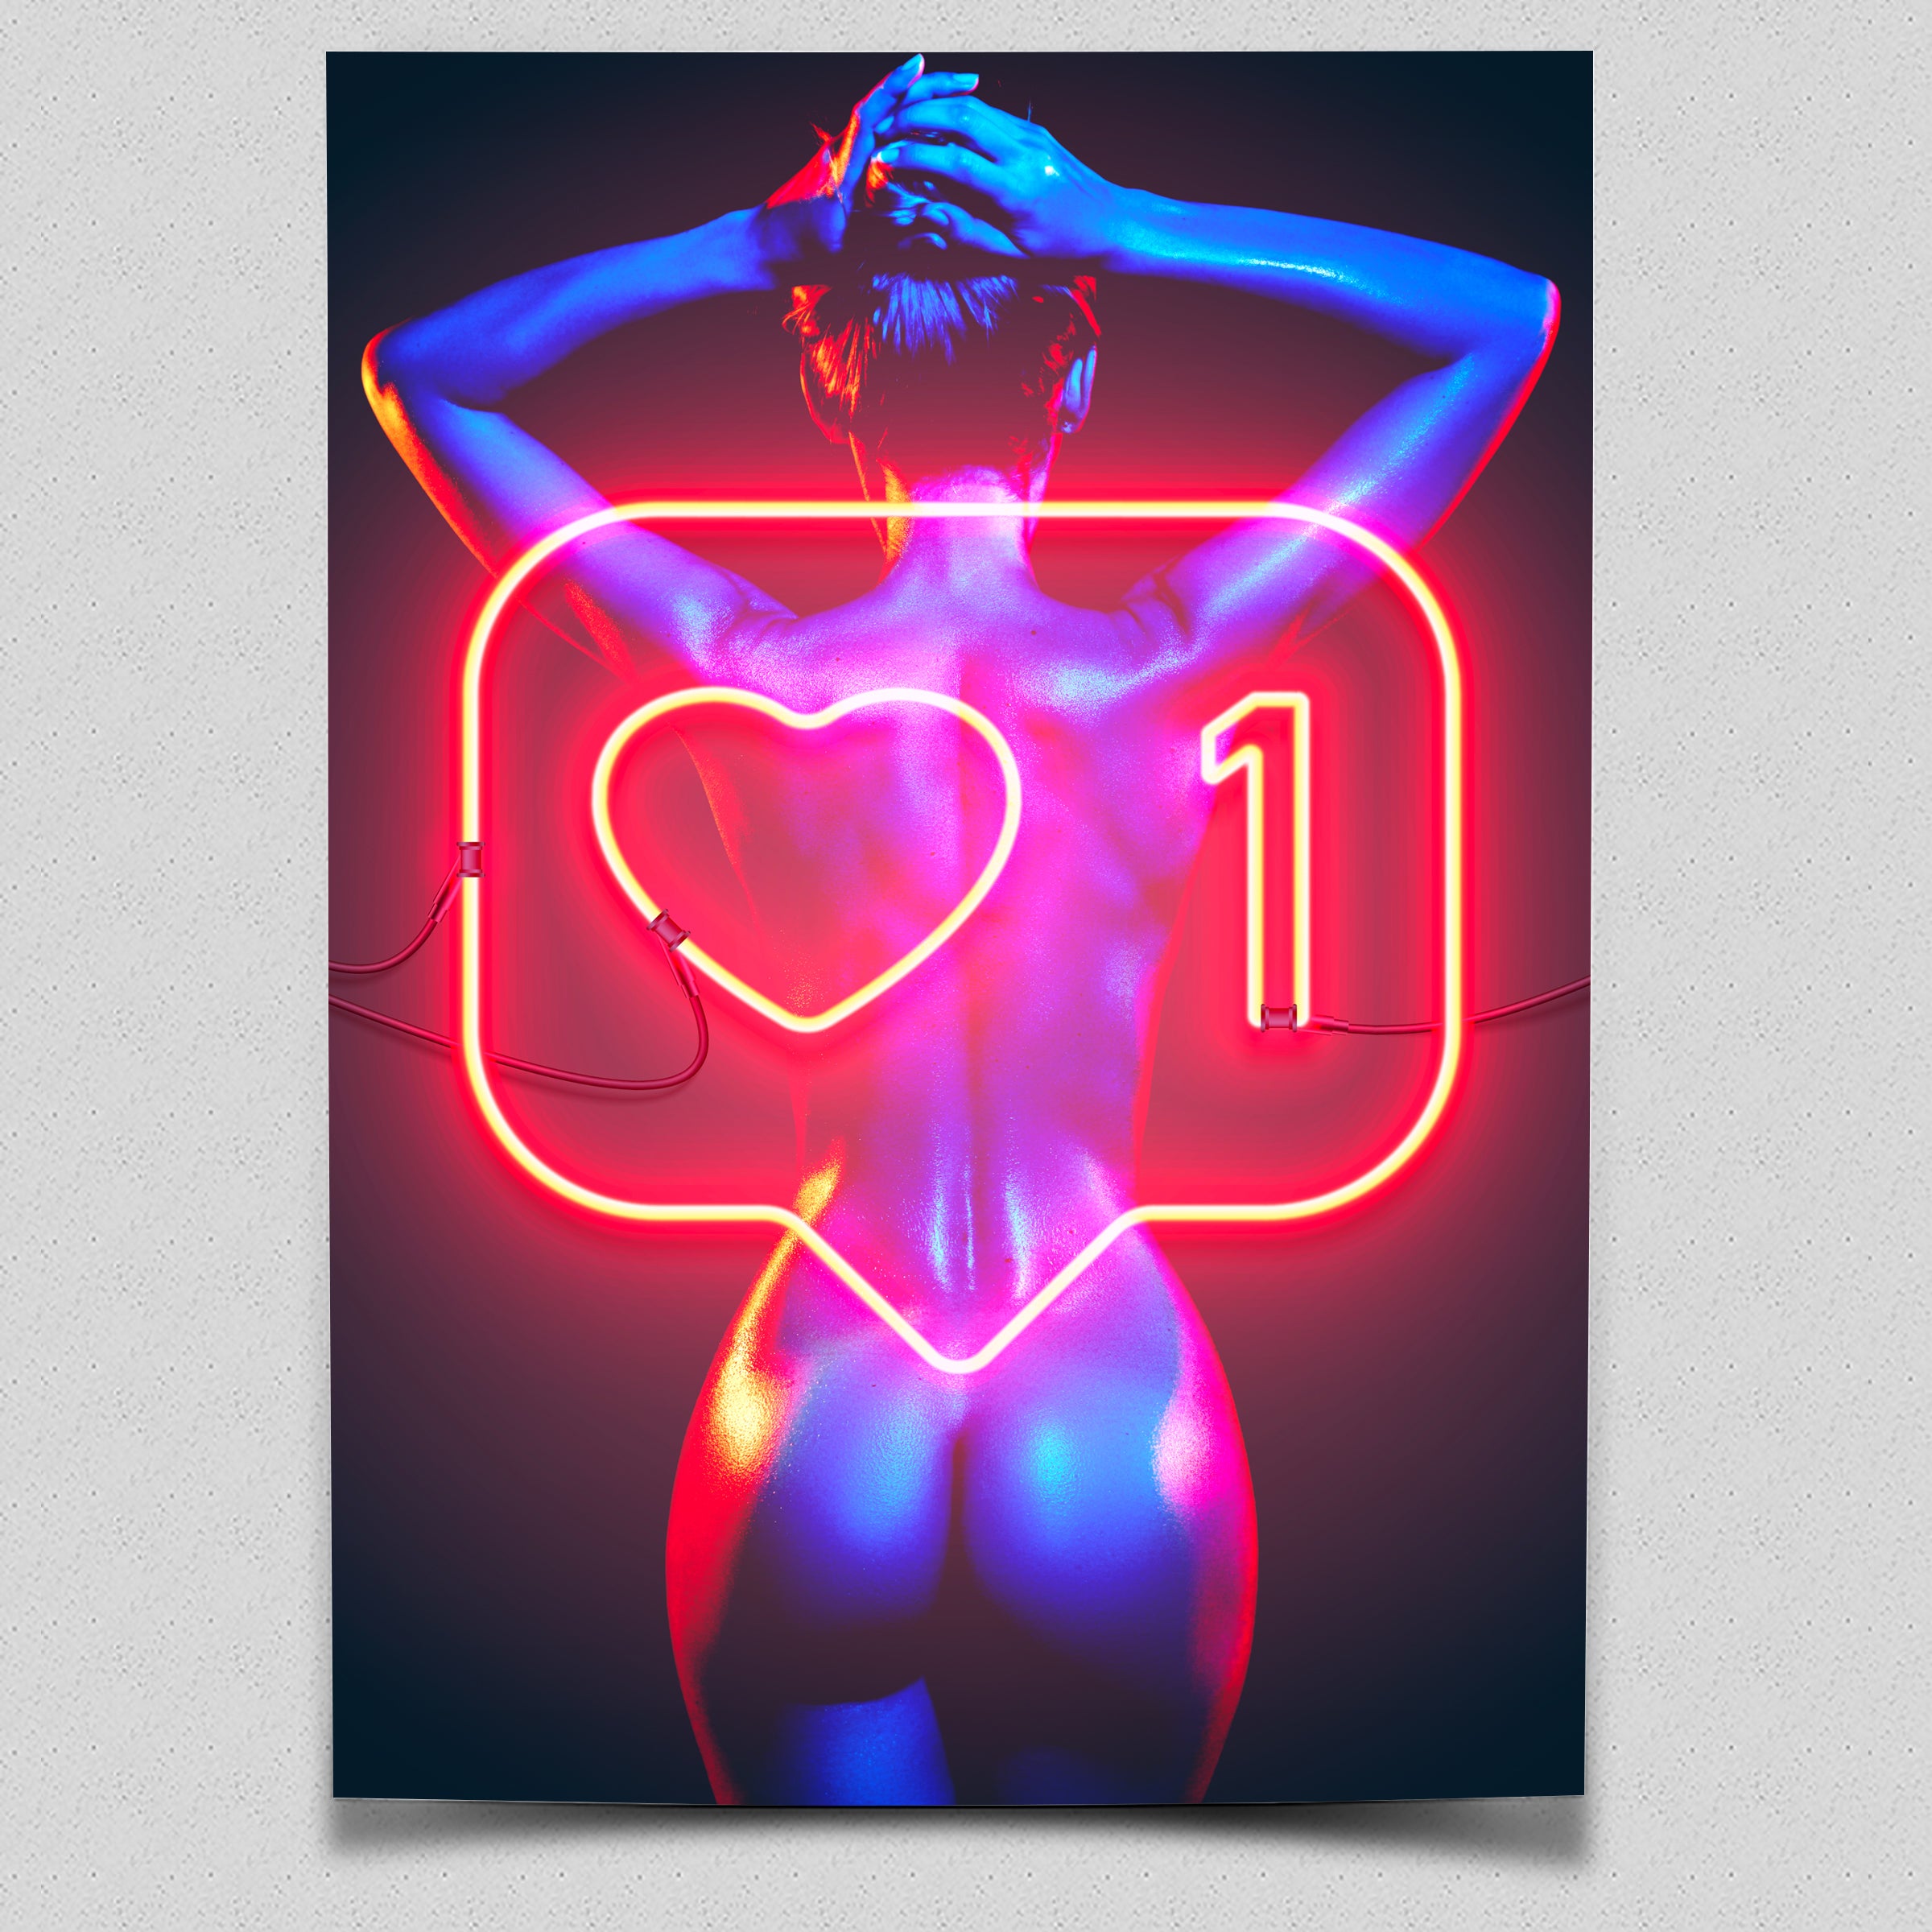 LIKE Neon - Limited Edition Art Print